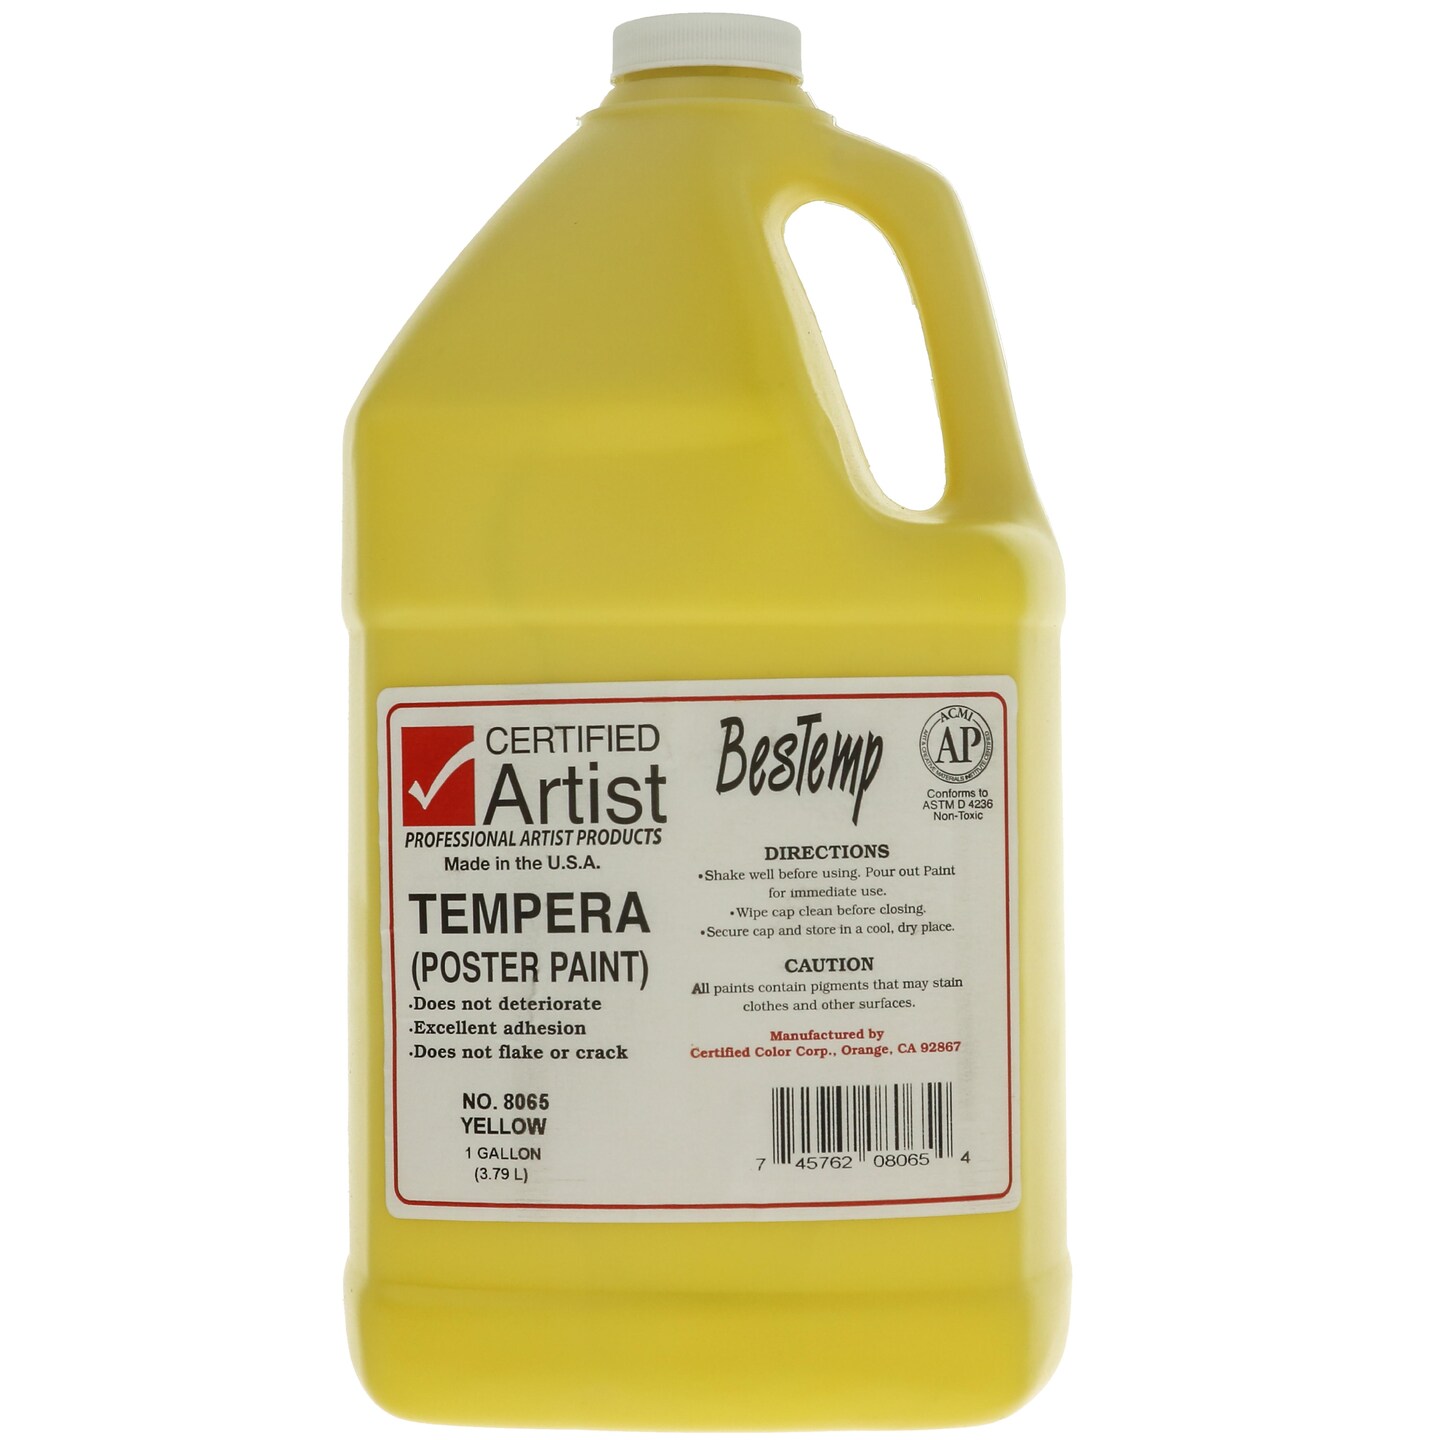 BesTemp Tempera Paint, Gallon Bottle, Regular Colors, Yellow